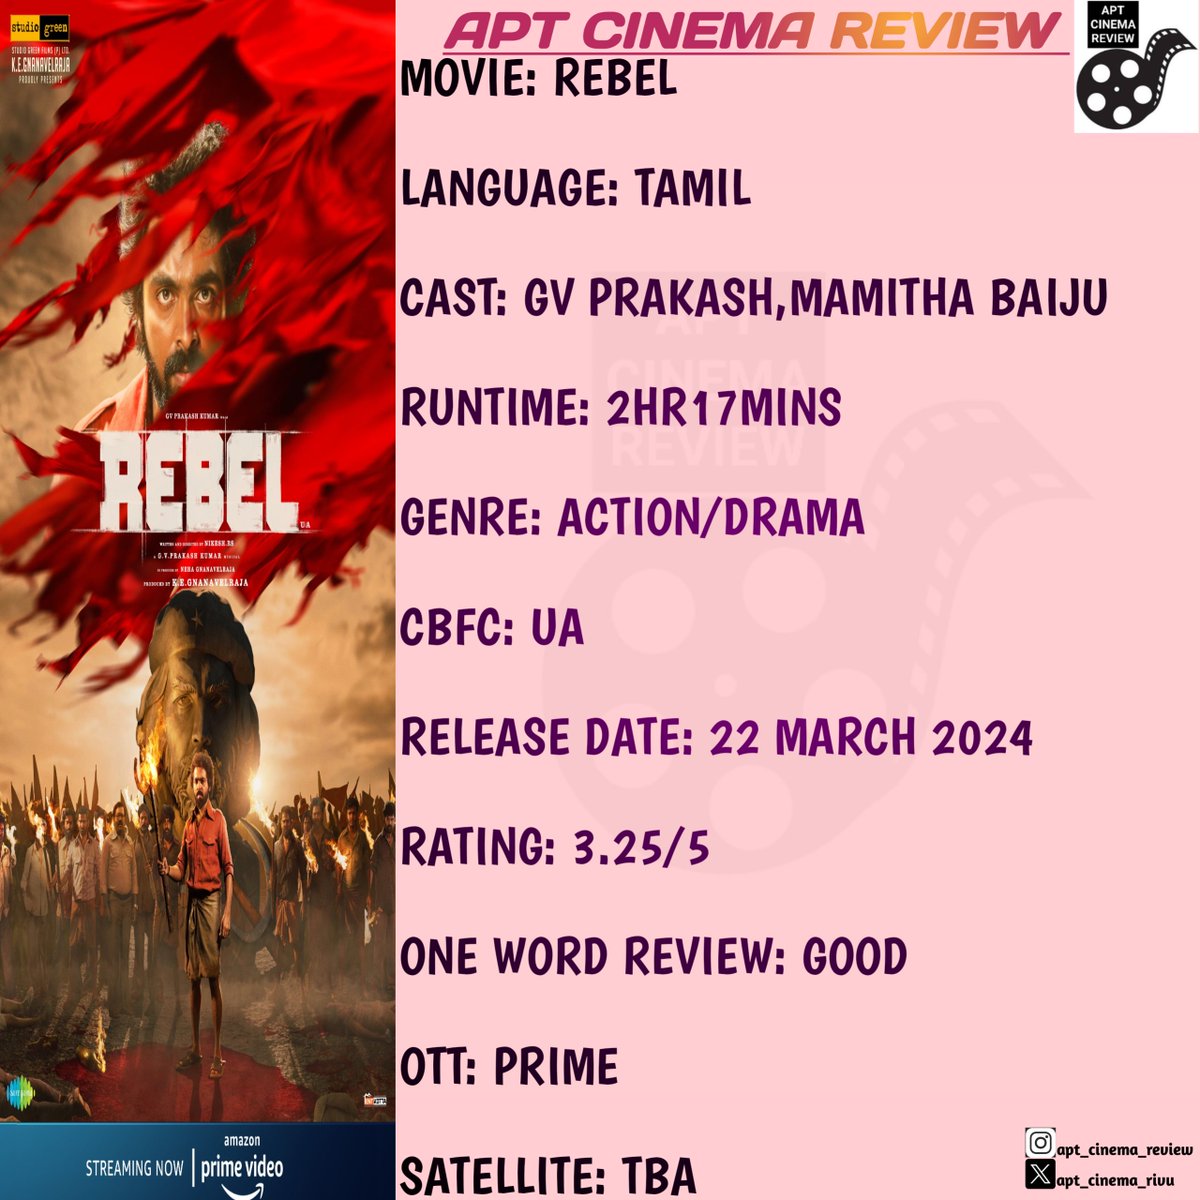 𝗔𝗣𝗧 𝗖𝗶𝗻𝗲𝗺𝗮 𝗥𝗲𝘃𝗶𝗲𝘄:

🎞️ #Rebel - 3.25/5
🗣️ Tamil
🌟 #GVPrakashKumar #MamithaBaiju
💿 Prime 
📡 TBA 
📝 Good👍

Cast: Good
Story: Good
Screenplay: Okay 
Music&BGM: Good 
🎥: Good
1st Half: Okay 
2nd Half: Good 
Overall: Good👍

#RebelReview #ரெபல் #RebelOnPrime